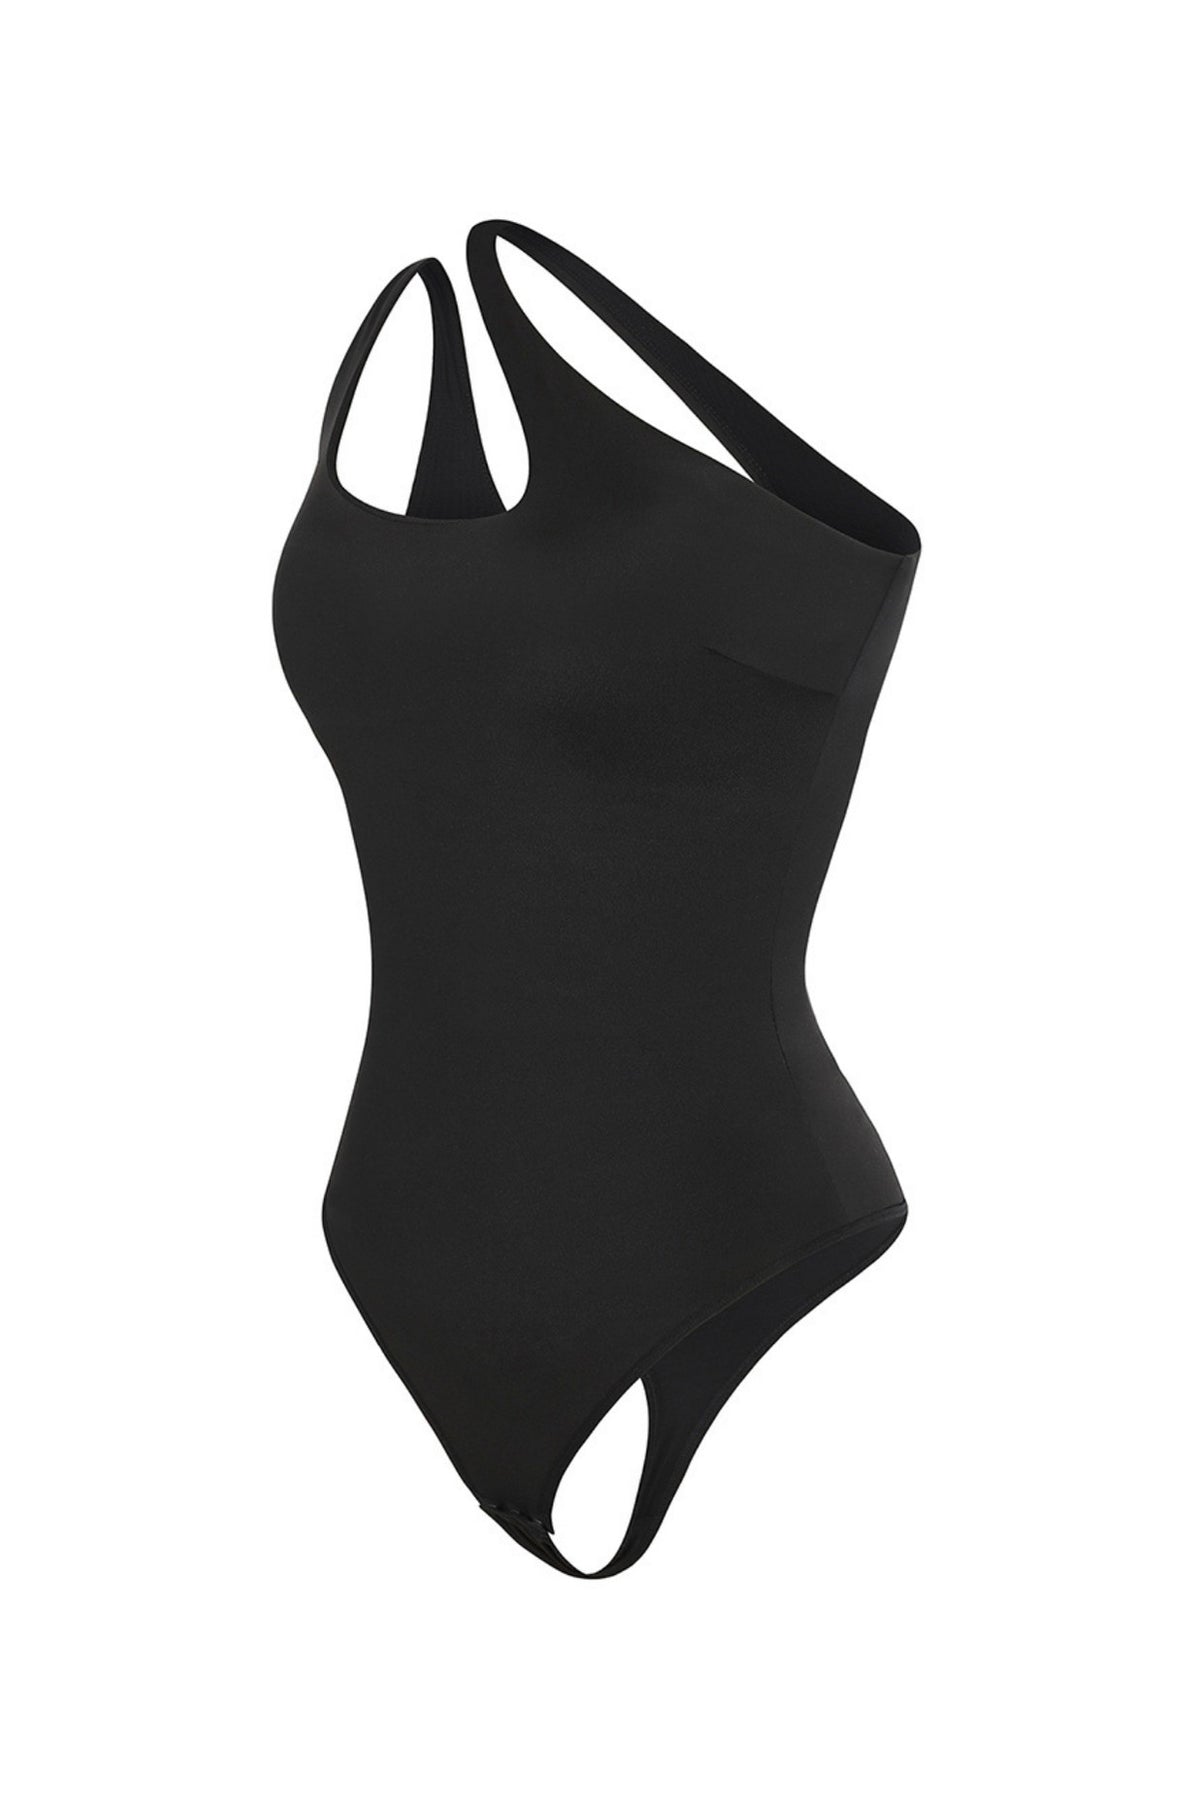 Coco Shaping Bodysuit - Black Contour Clothing